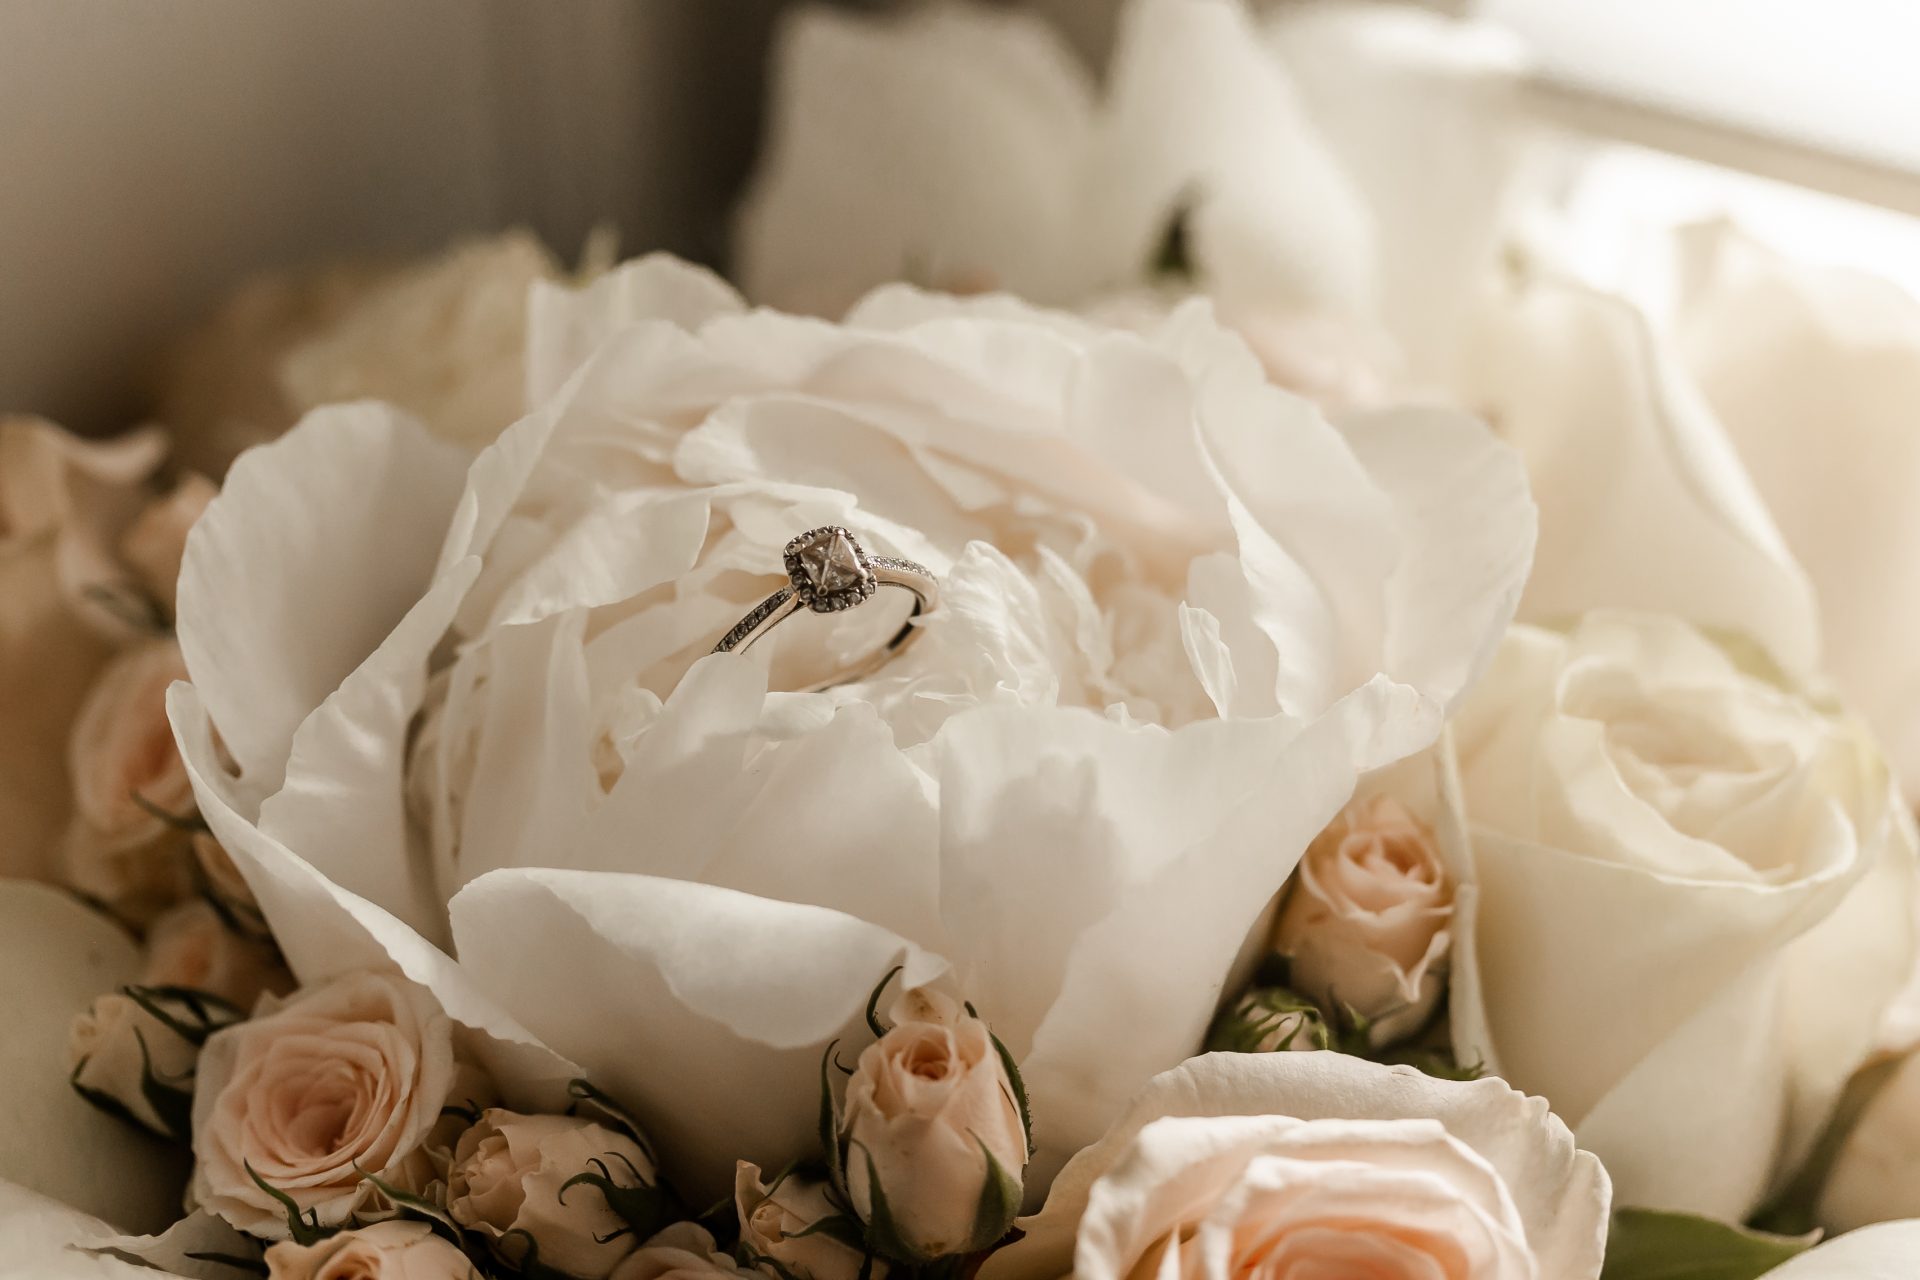 White gold engagement ring nestled in a white rose